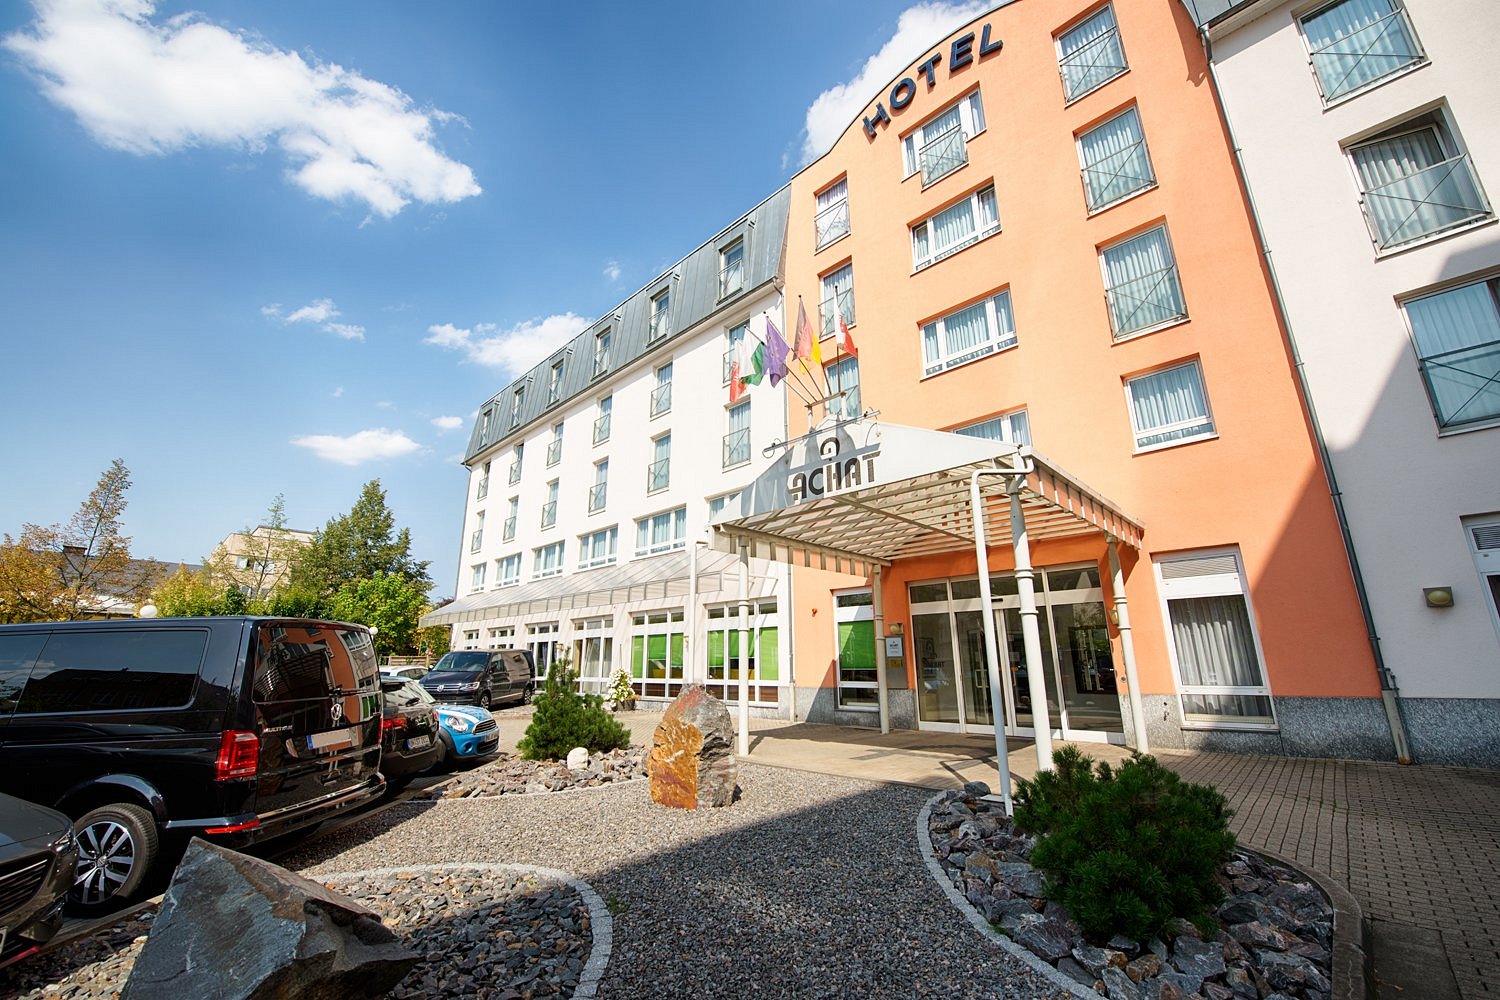 ACHAT Hotel Zwickau image